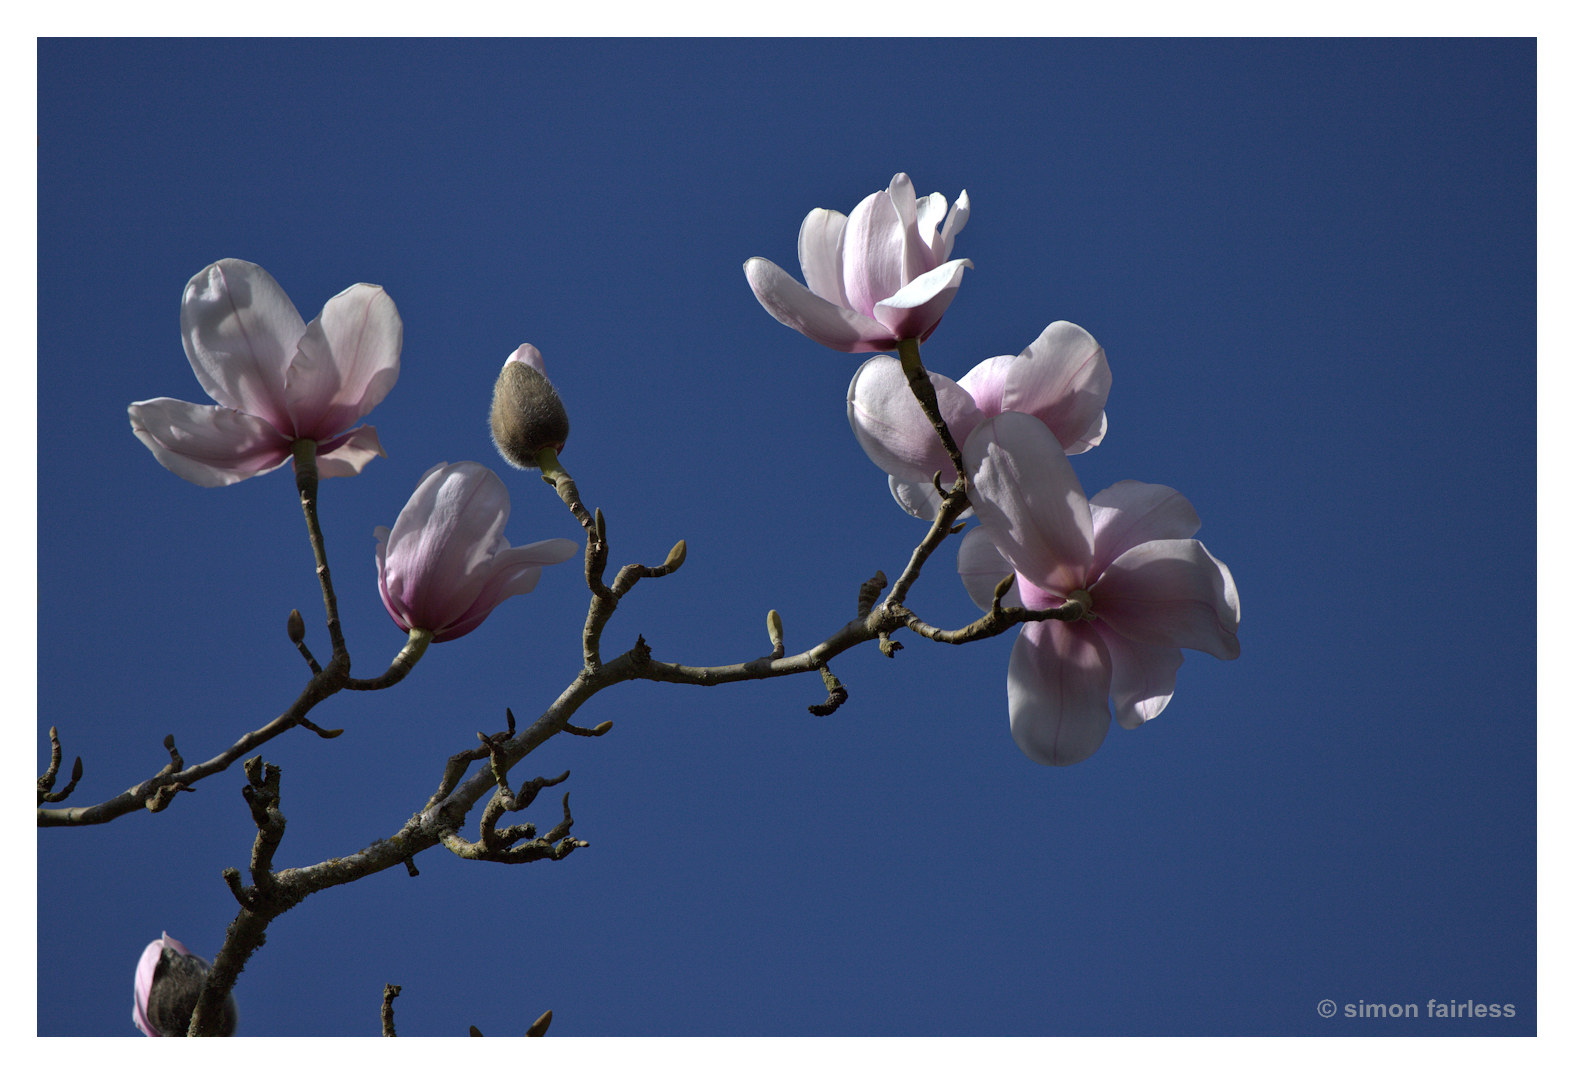 Floral Image of Magnolia blossom